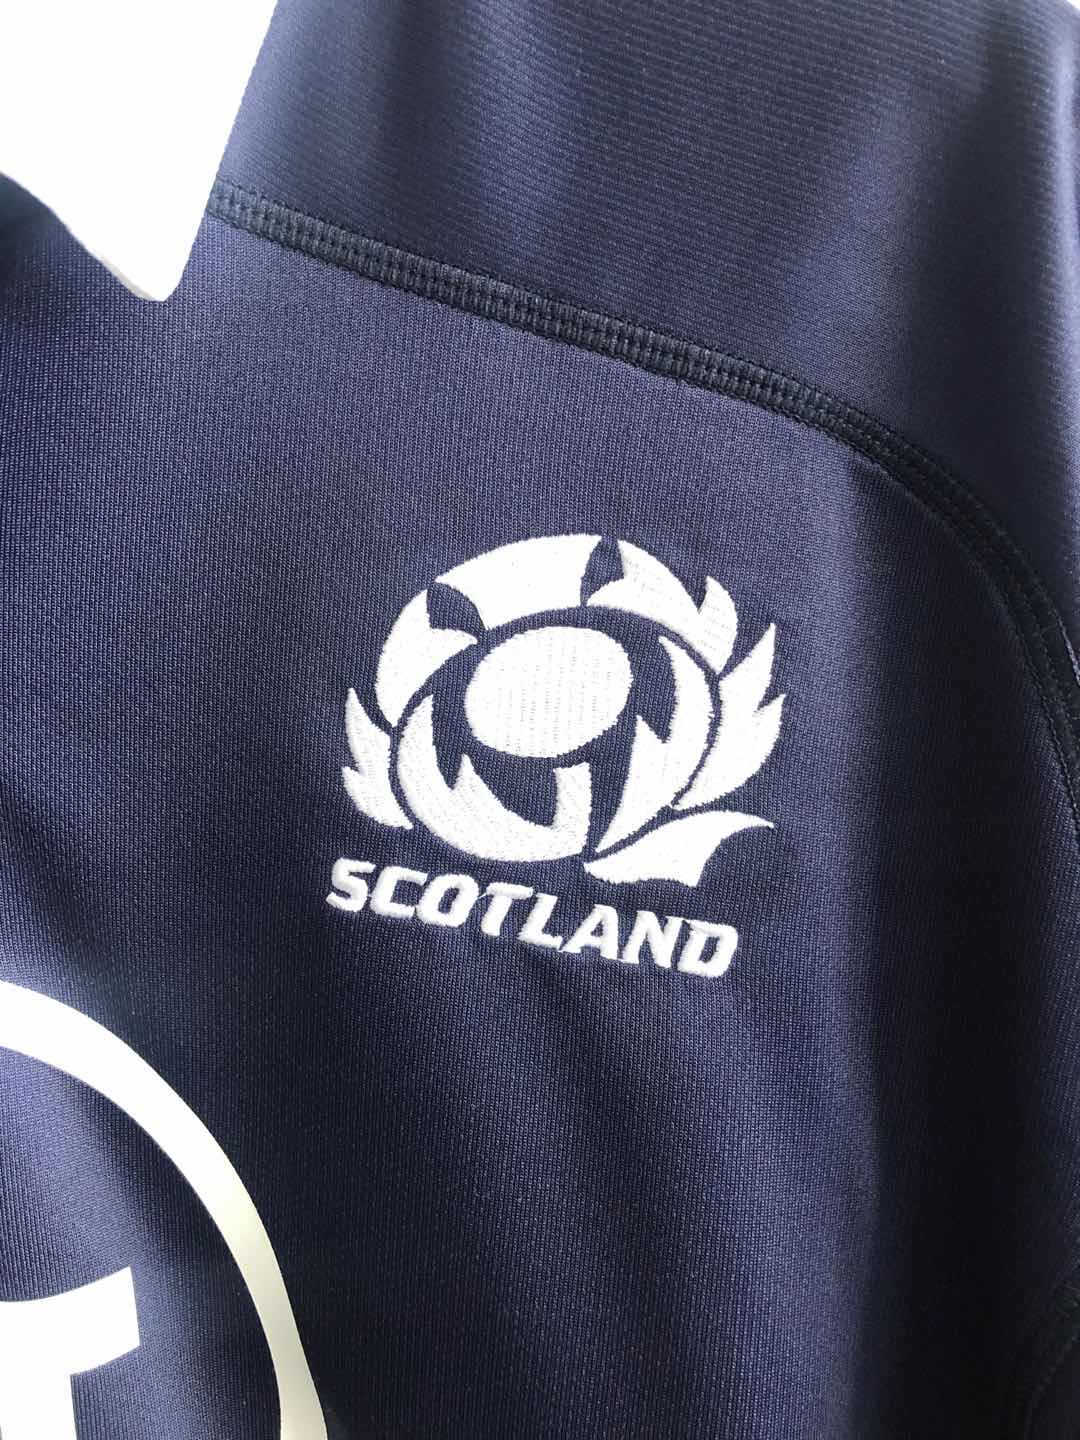 2021 Scotland Home Rugby Soccer Jersey Replica  Mens